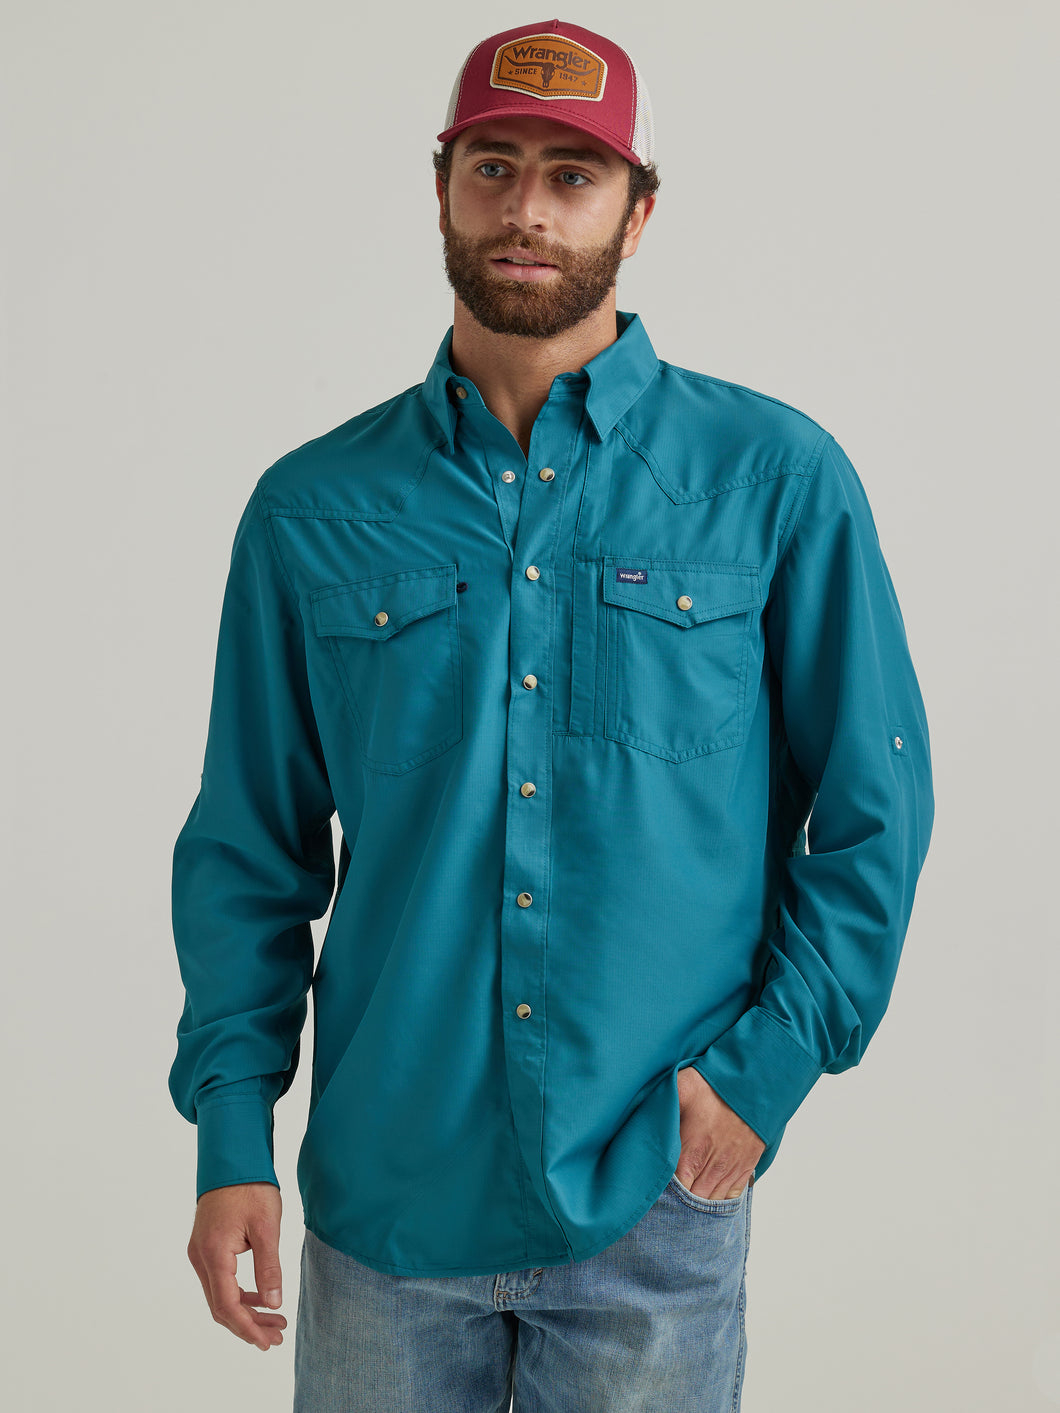 Pard's Western Shop Men's Wrangler Solid Teal Performance Snap Western Shirt